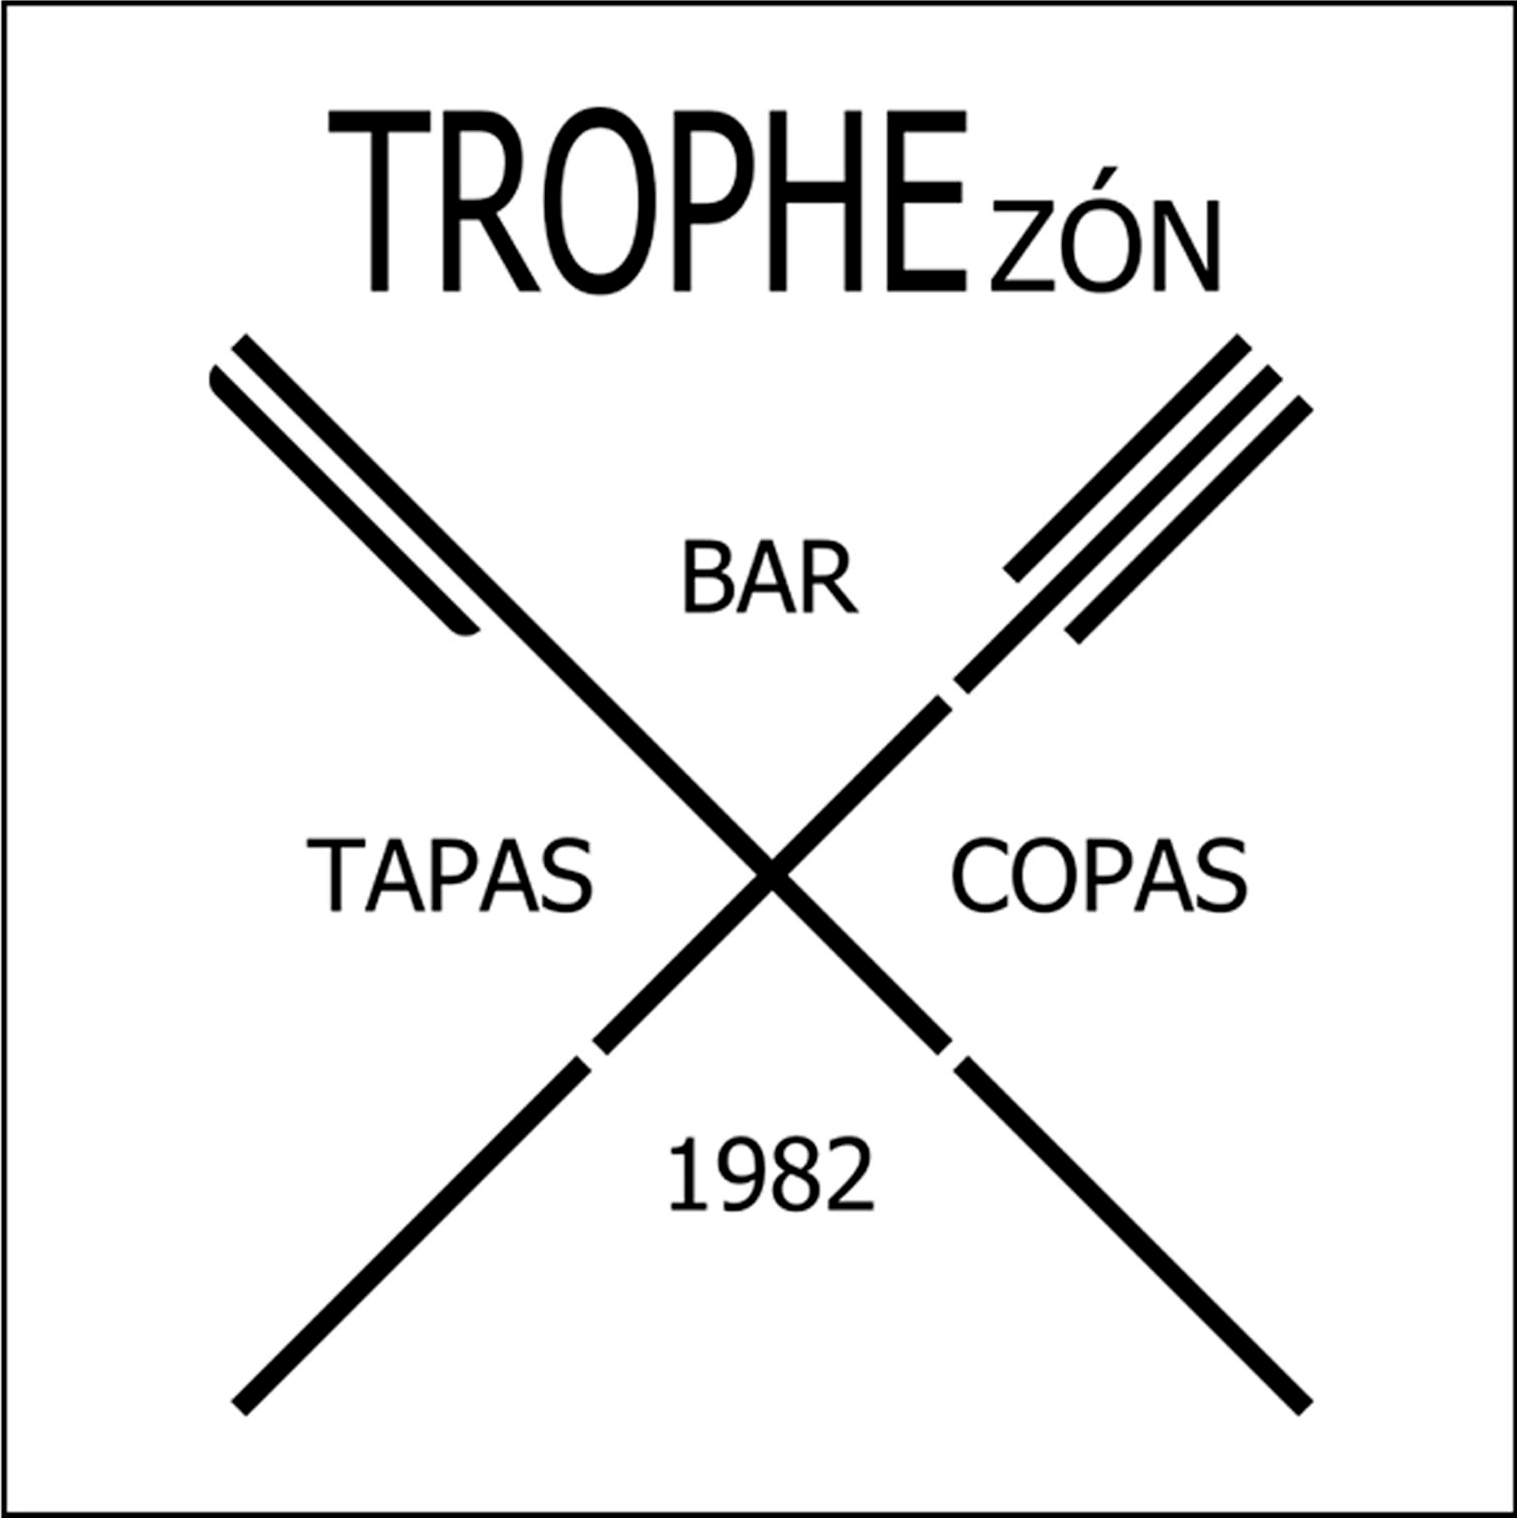 Bar TROPHEzón